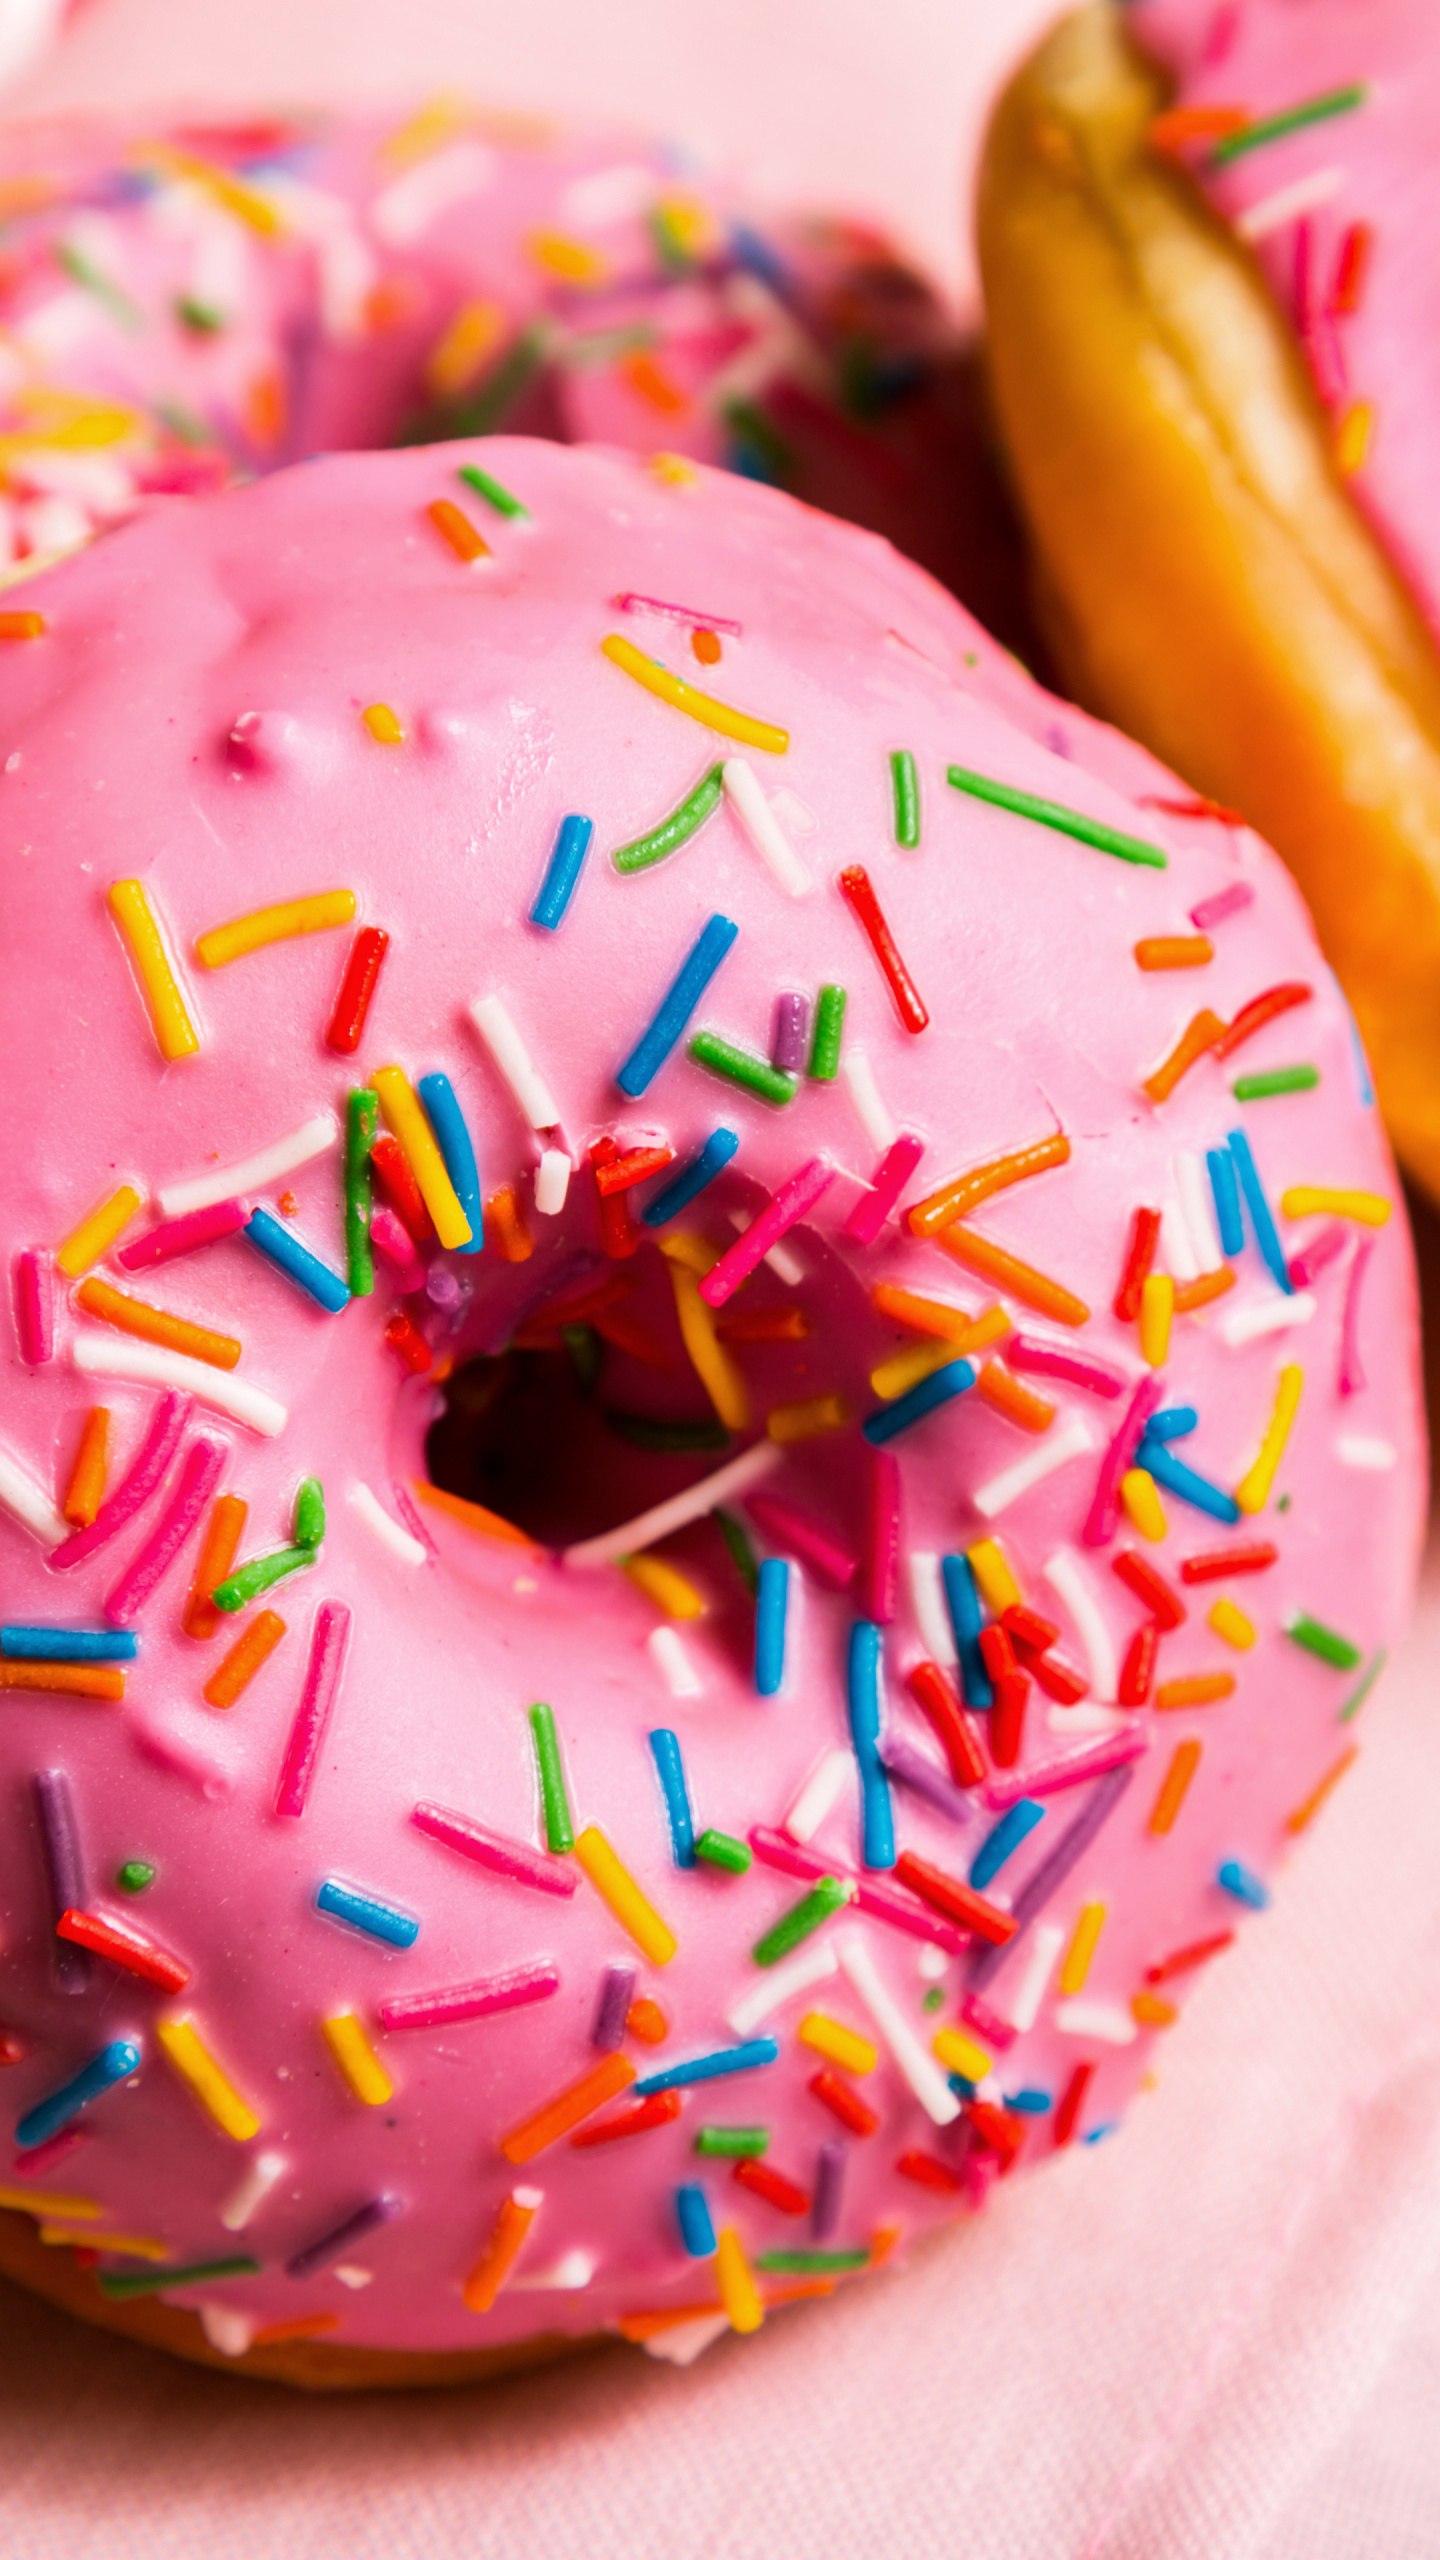 Donut: Fried sweet dough, Rainbow sprinkles, Icing. 1440x2560 HD Wallpaper.